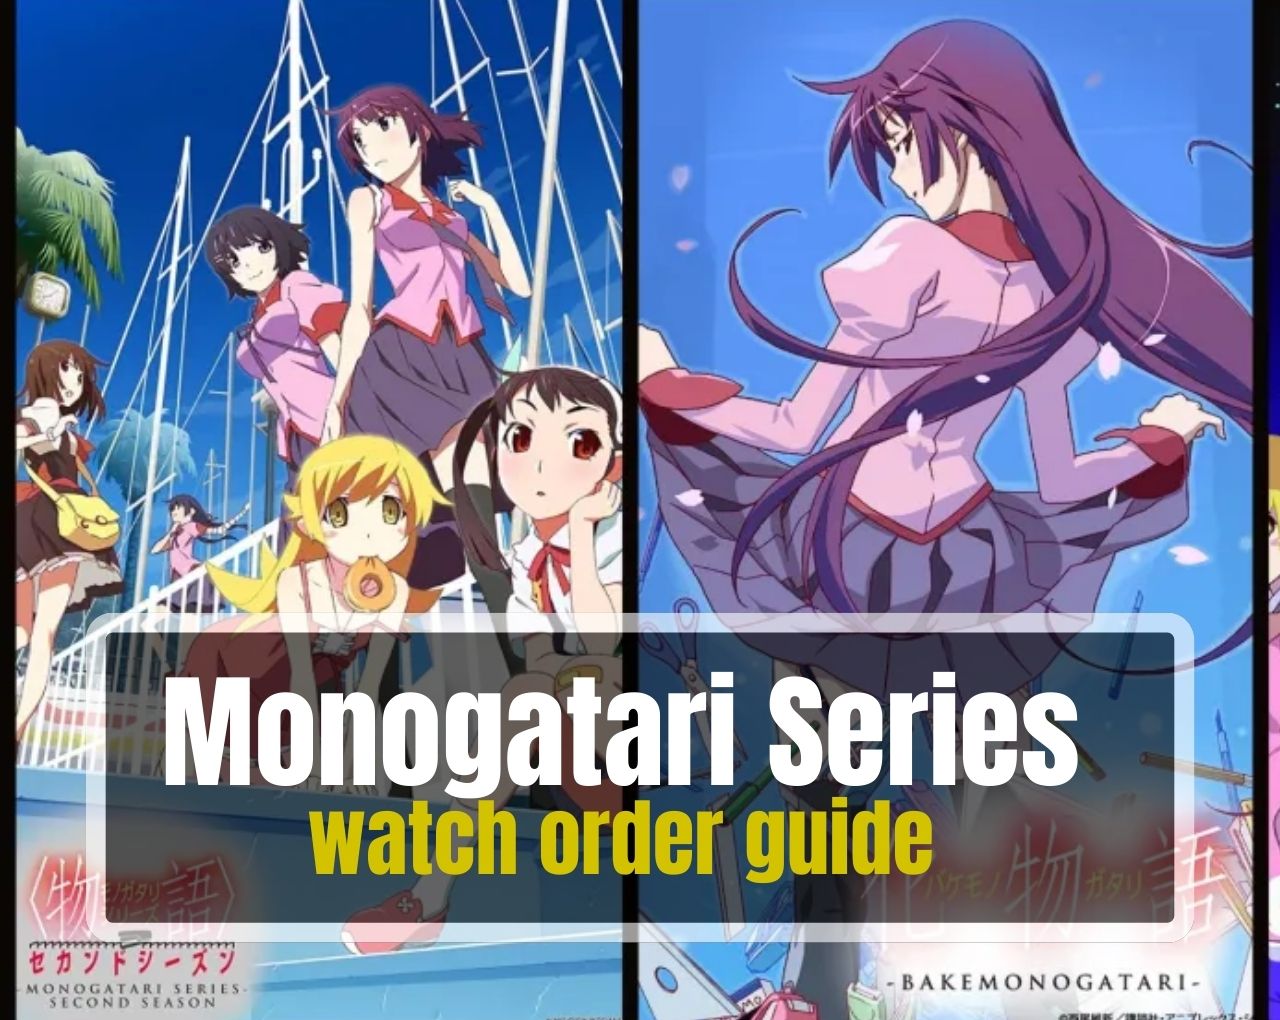 Monogatari Series watch order guide